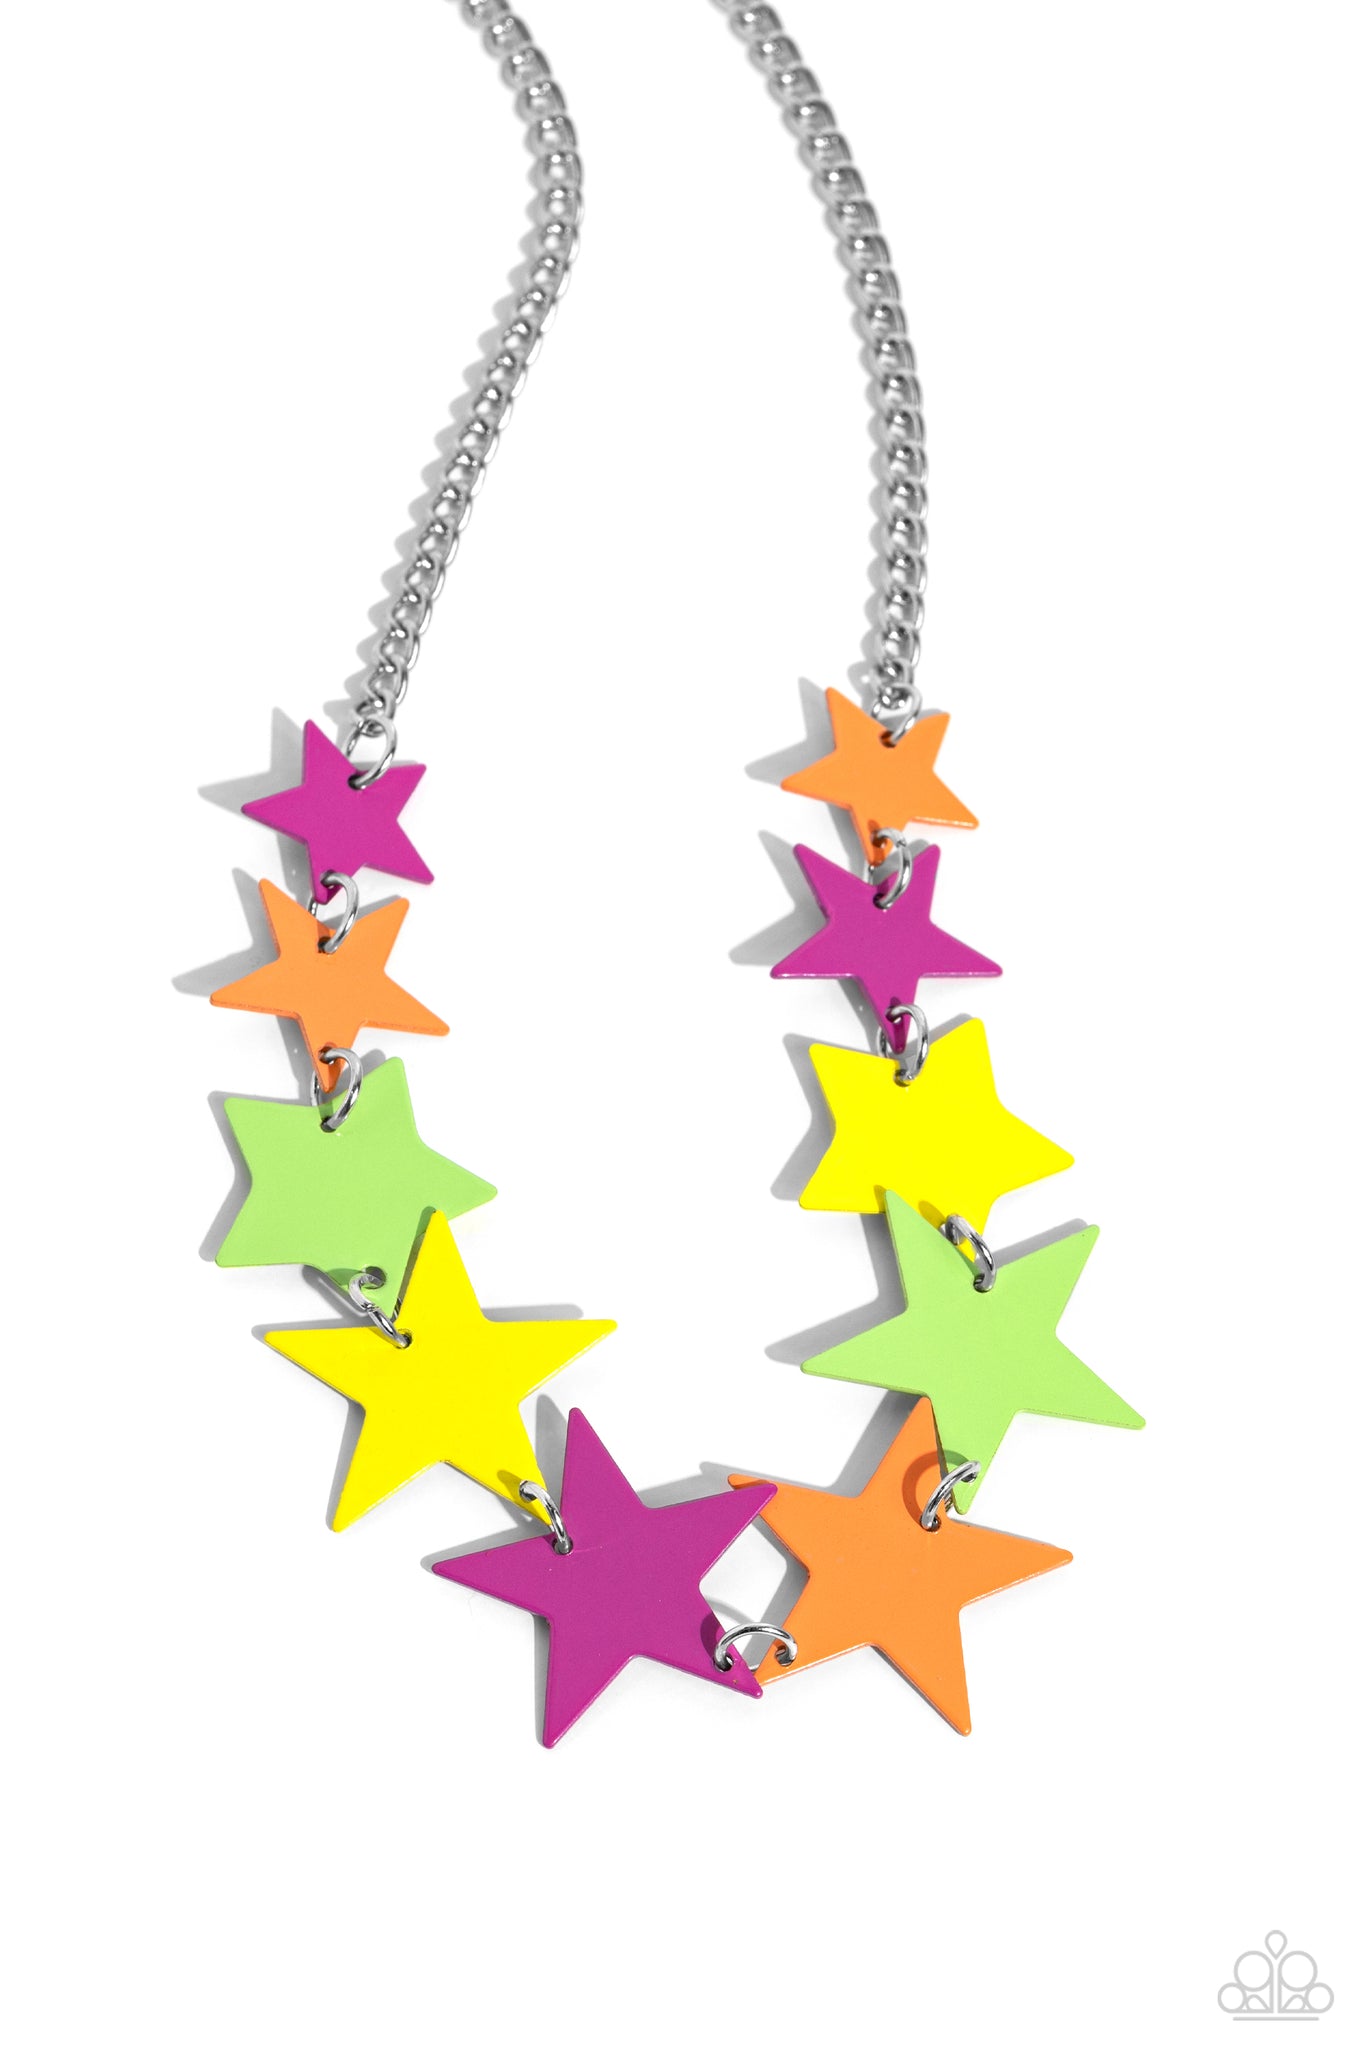 Starstruck Season Necklace (Multi, Red)